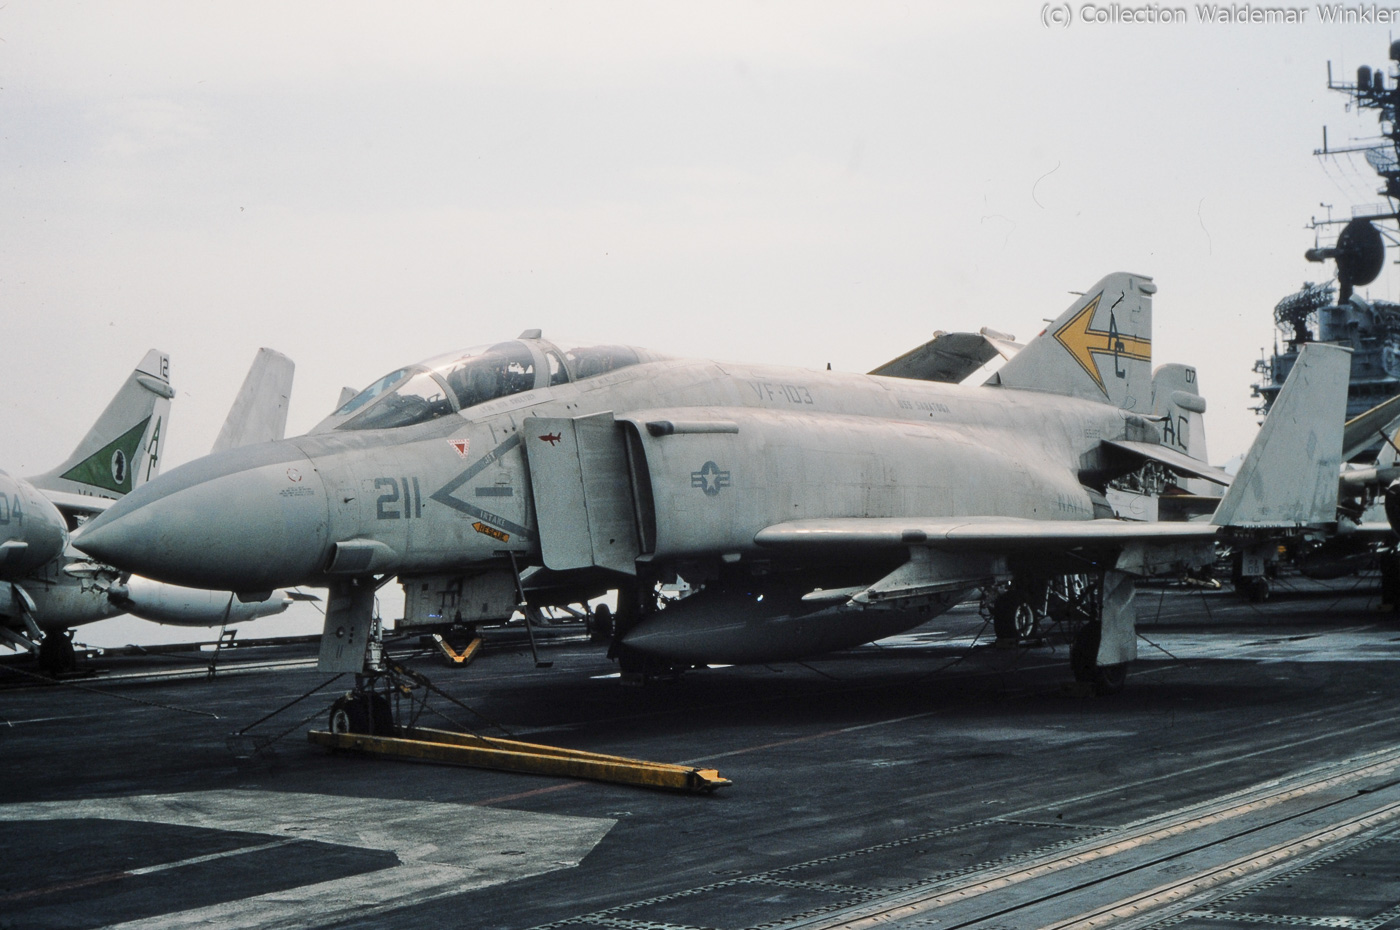 F-4_Phantom_II_DSC_2919.jpg